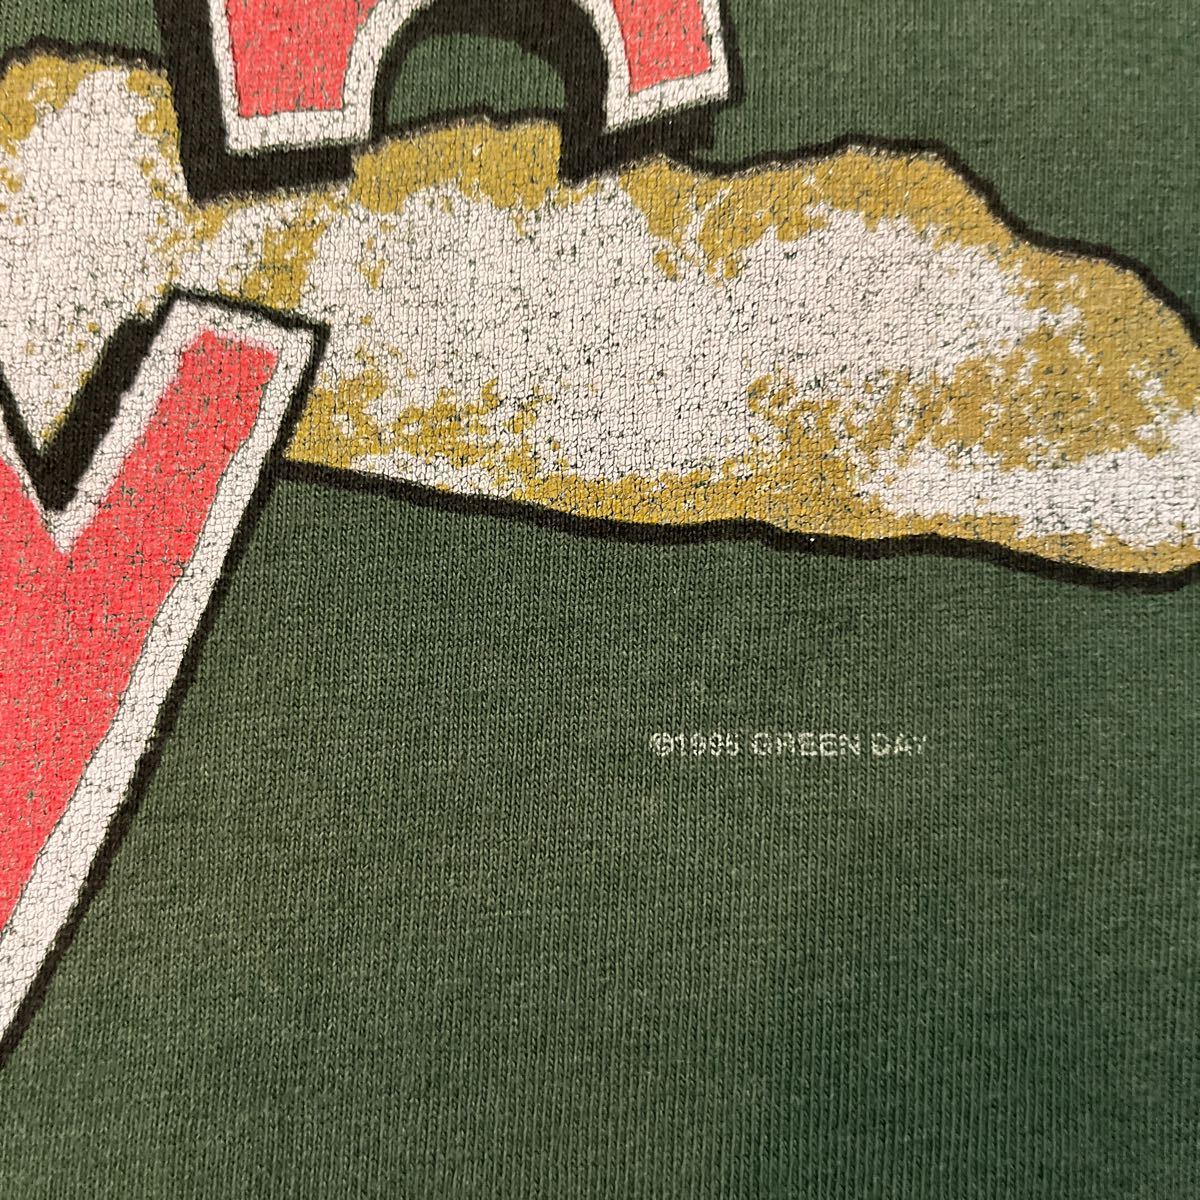 90s GREEN DAY グリーンデイ DOOKIE Tシャツ バンT 1995コピーライト 古着 ヴィンテージ Nirvana _画像5